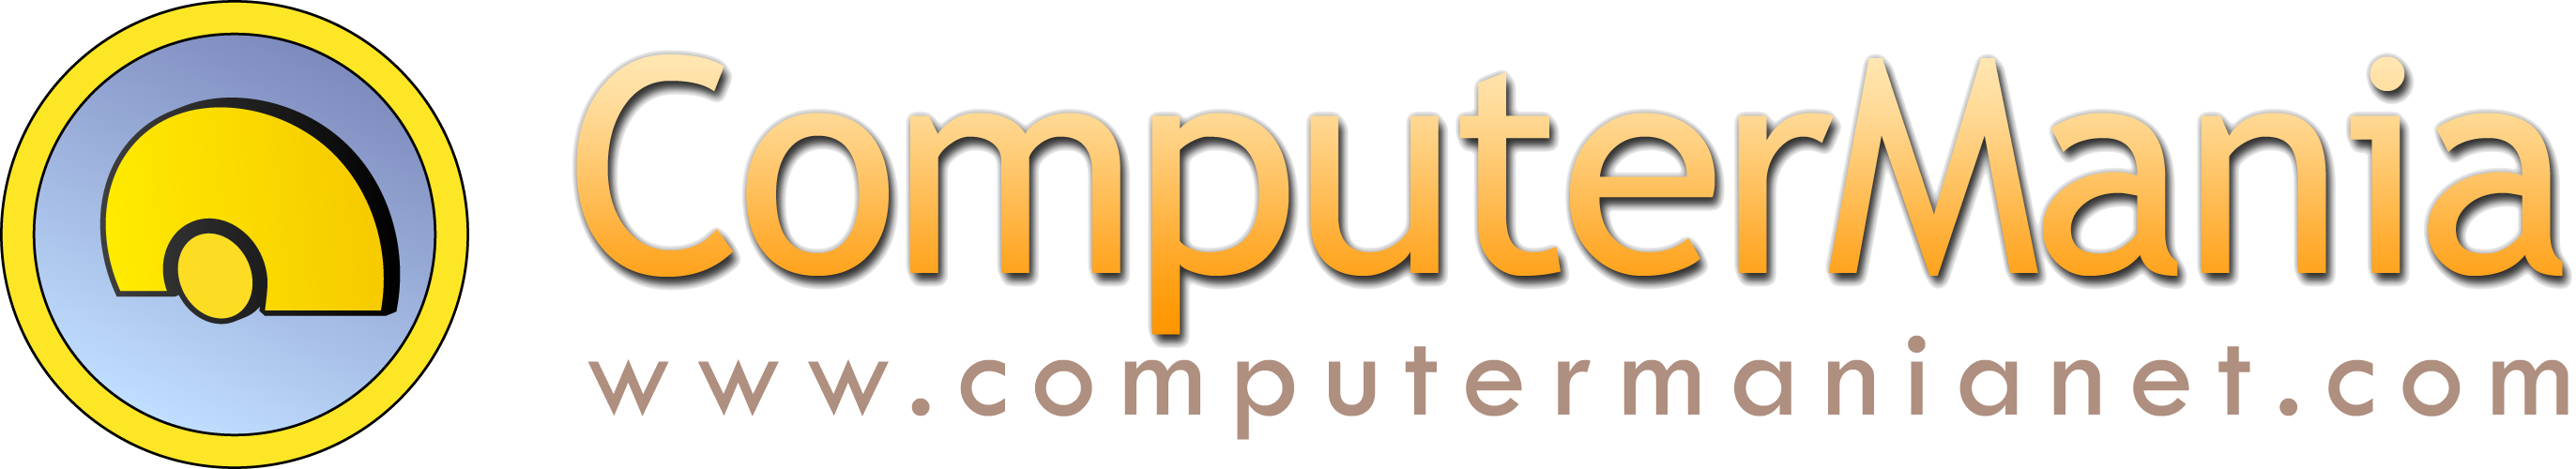 Computer Mania Sas